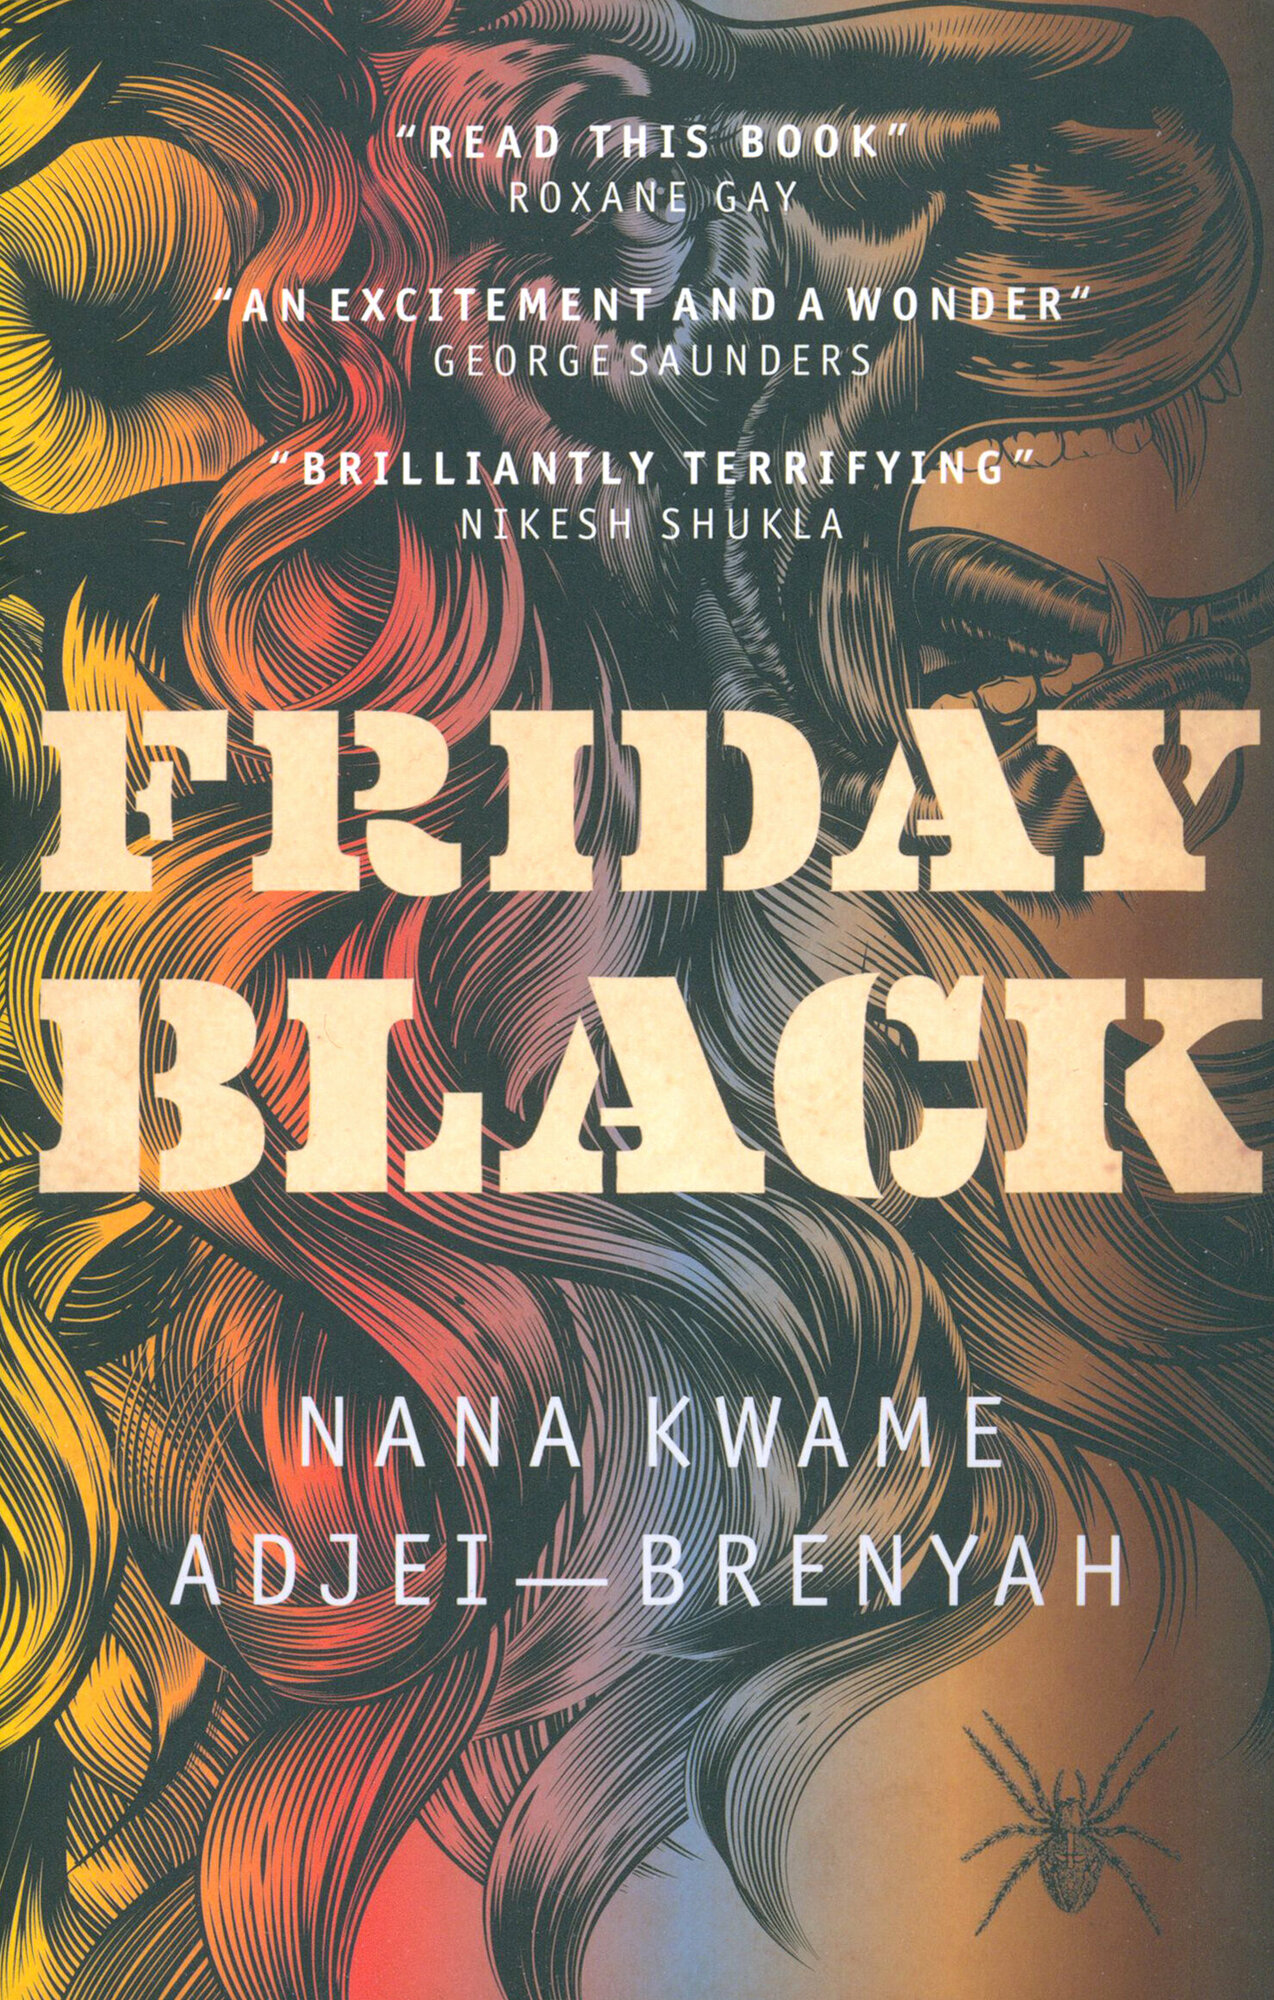 Friday Black | Adjei-Brenyah Nana Kwame